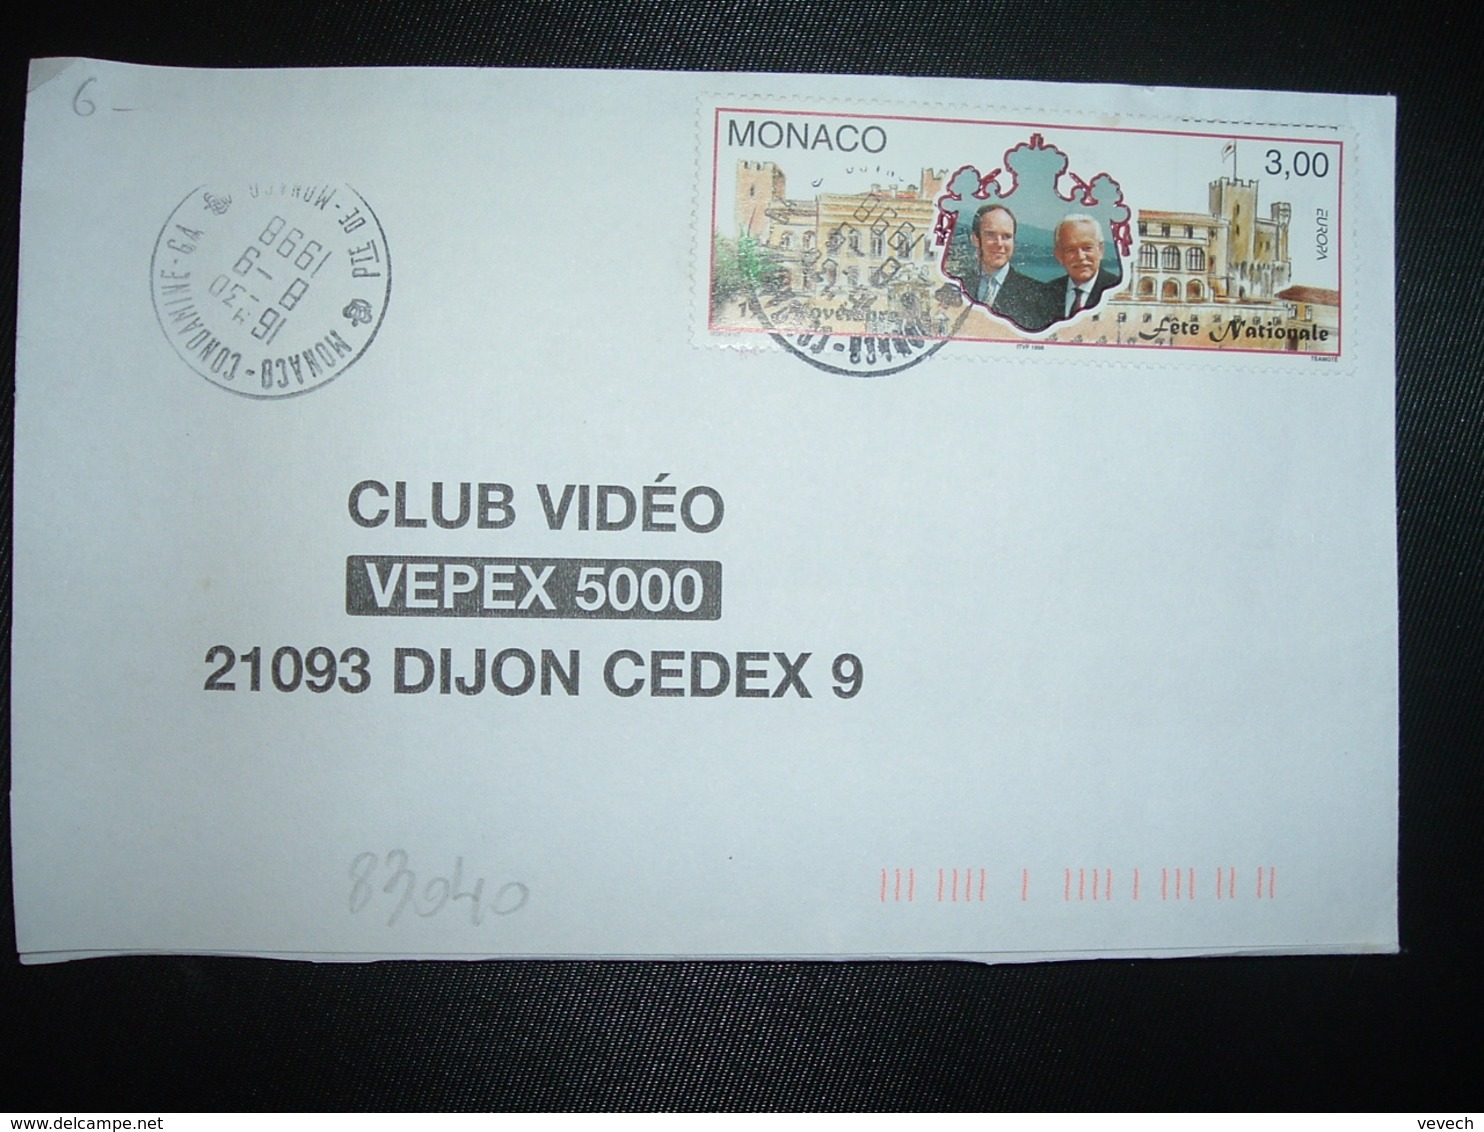 LETTRE TP EUROPA FETE NATIONALE 3,00 OBL.8-9 1998 MONACO CONDAMINE GA (GUICHET ANNEXE) - Covers & Documents